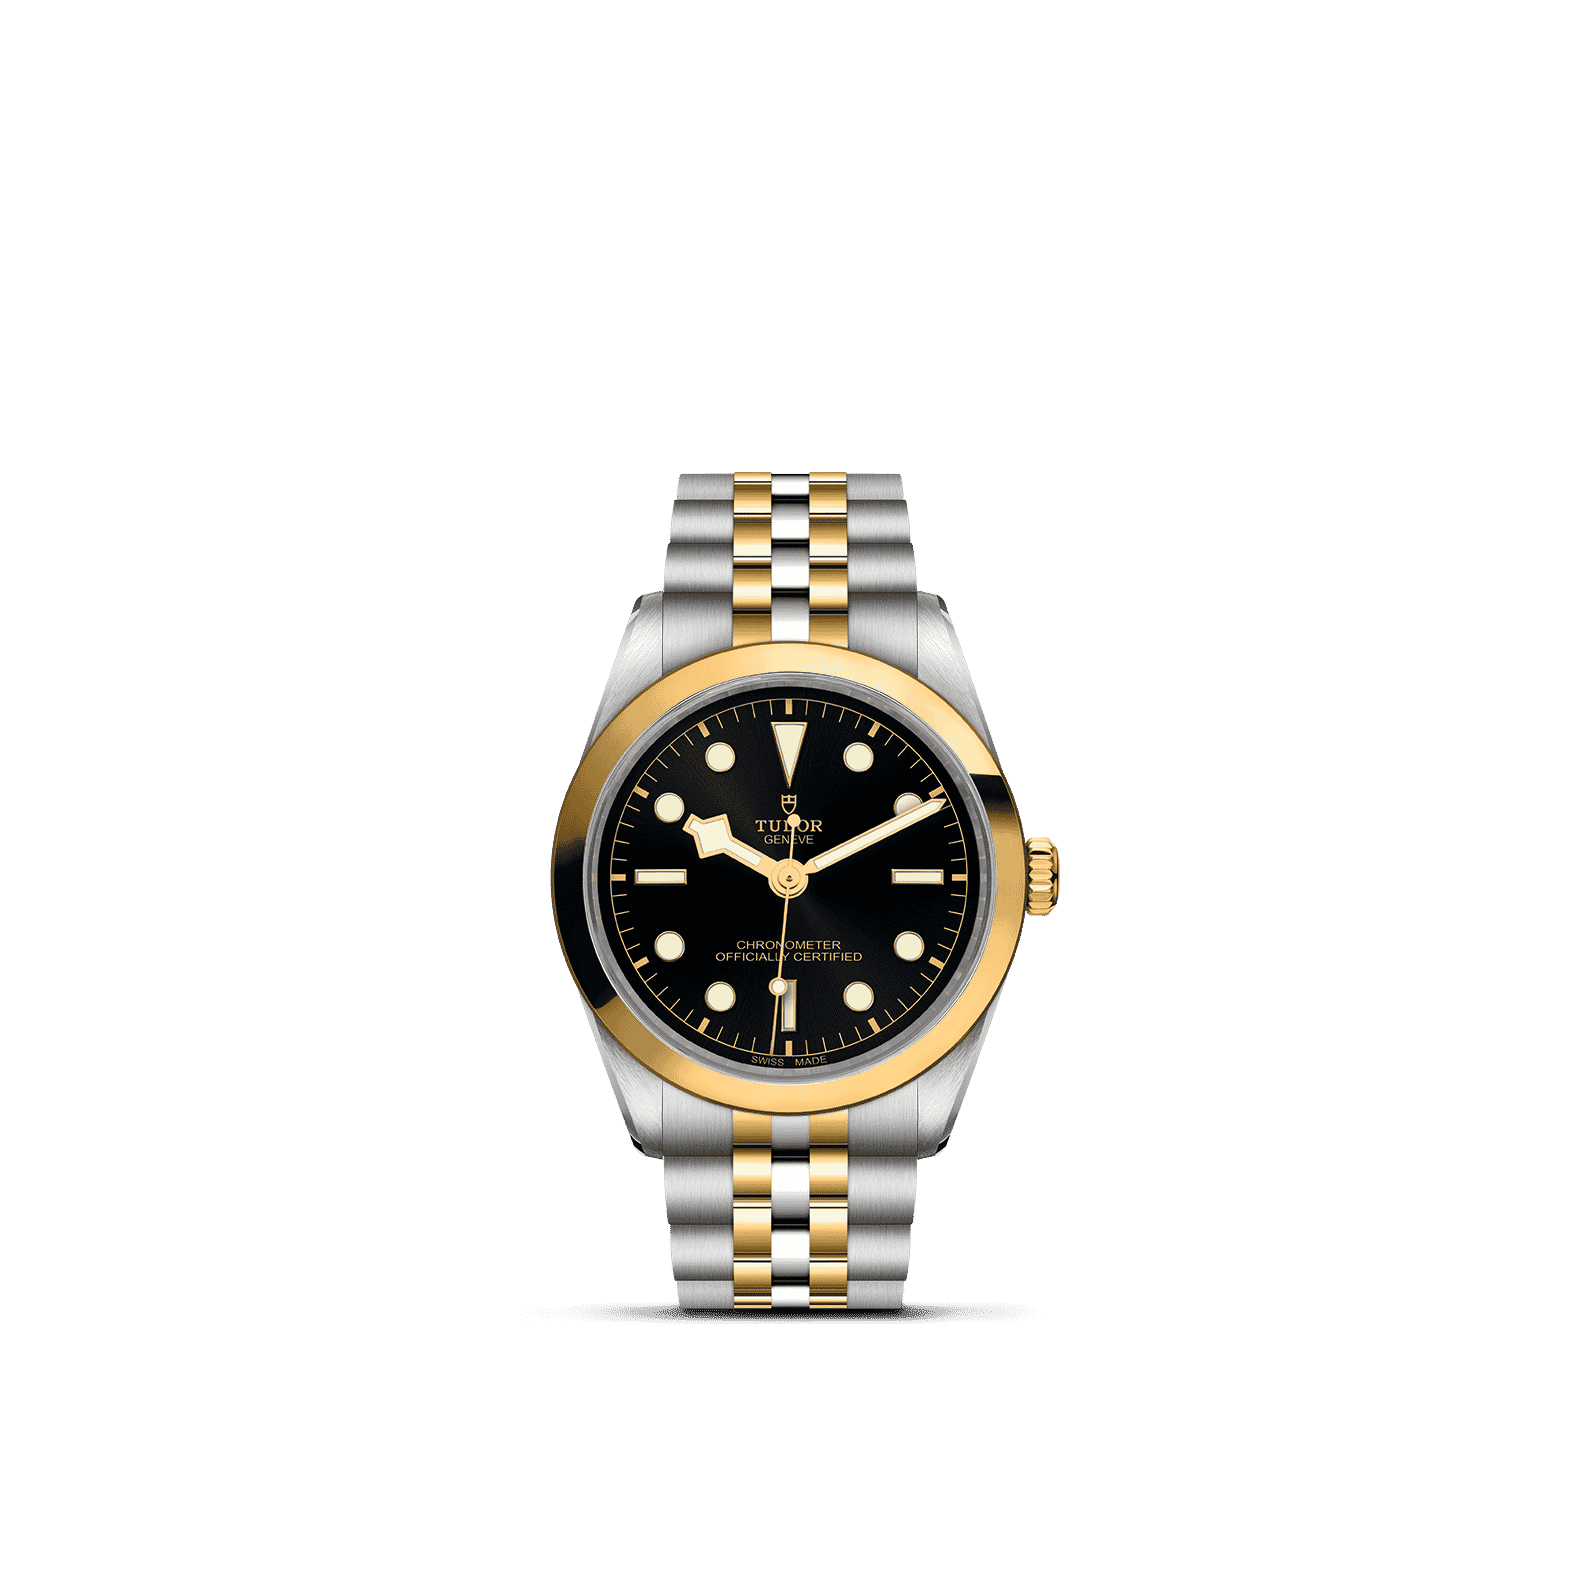 Tudor Watch AssetsM79643 0001 Upright Transparent Background